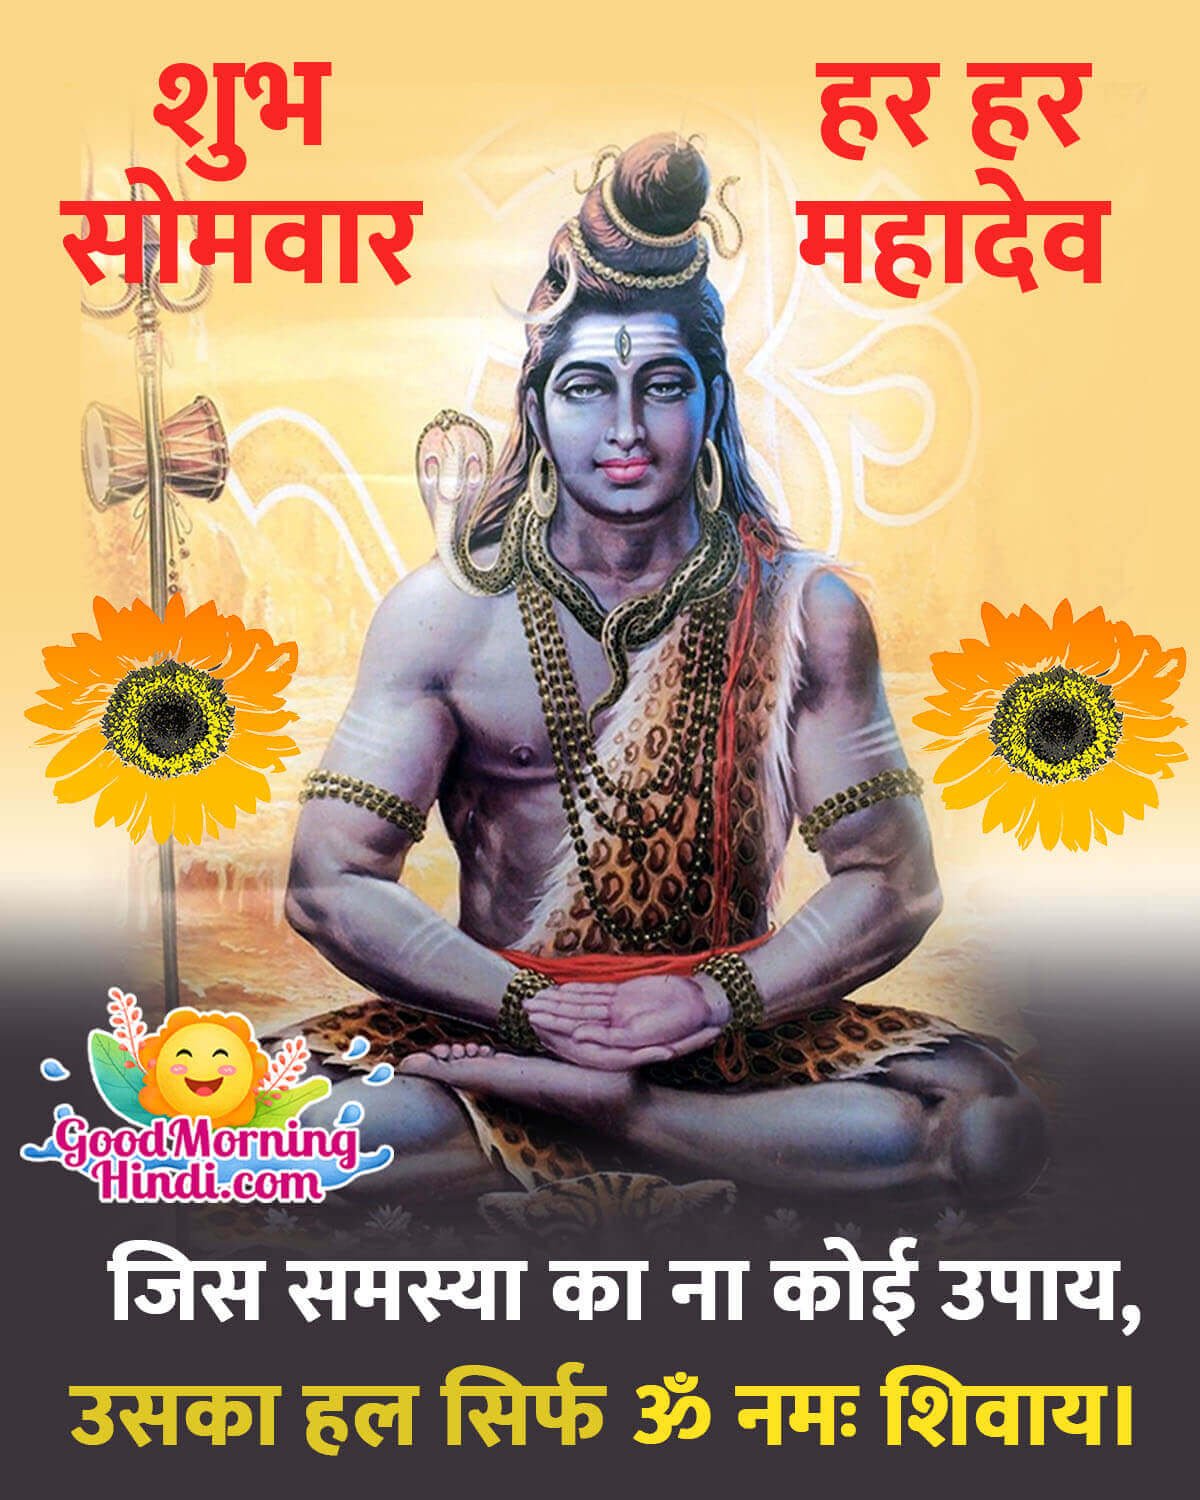 Lord Shiva Monday Good Morning Images in Hindi - Good Morning ...